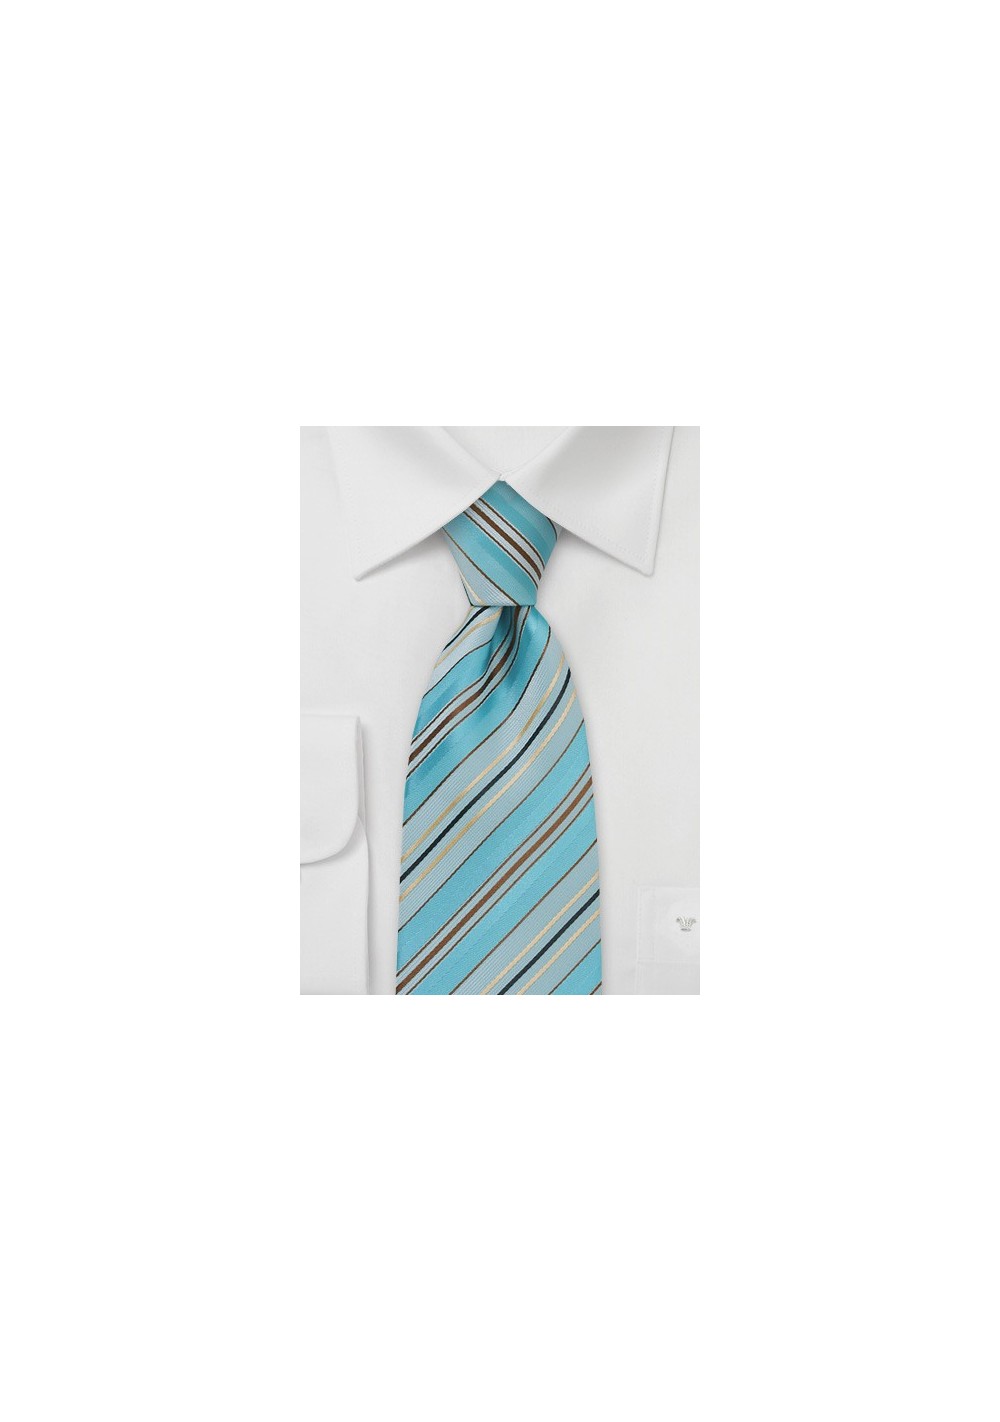 Pool Blue Striped Necktie